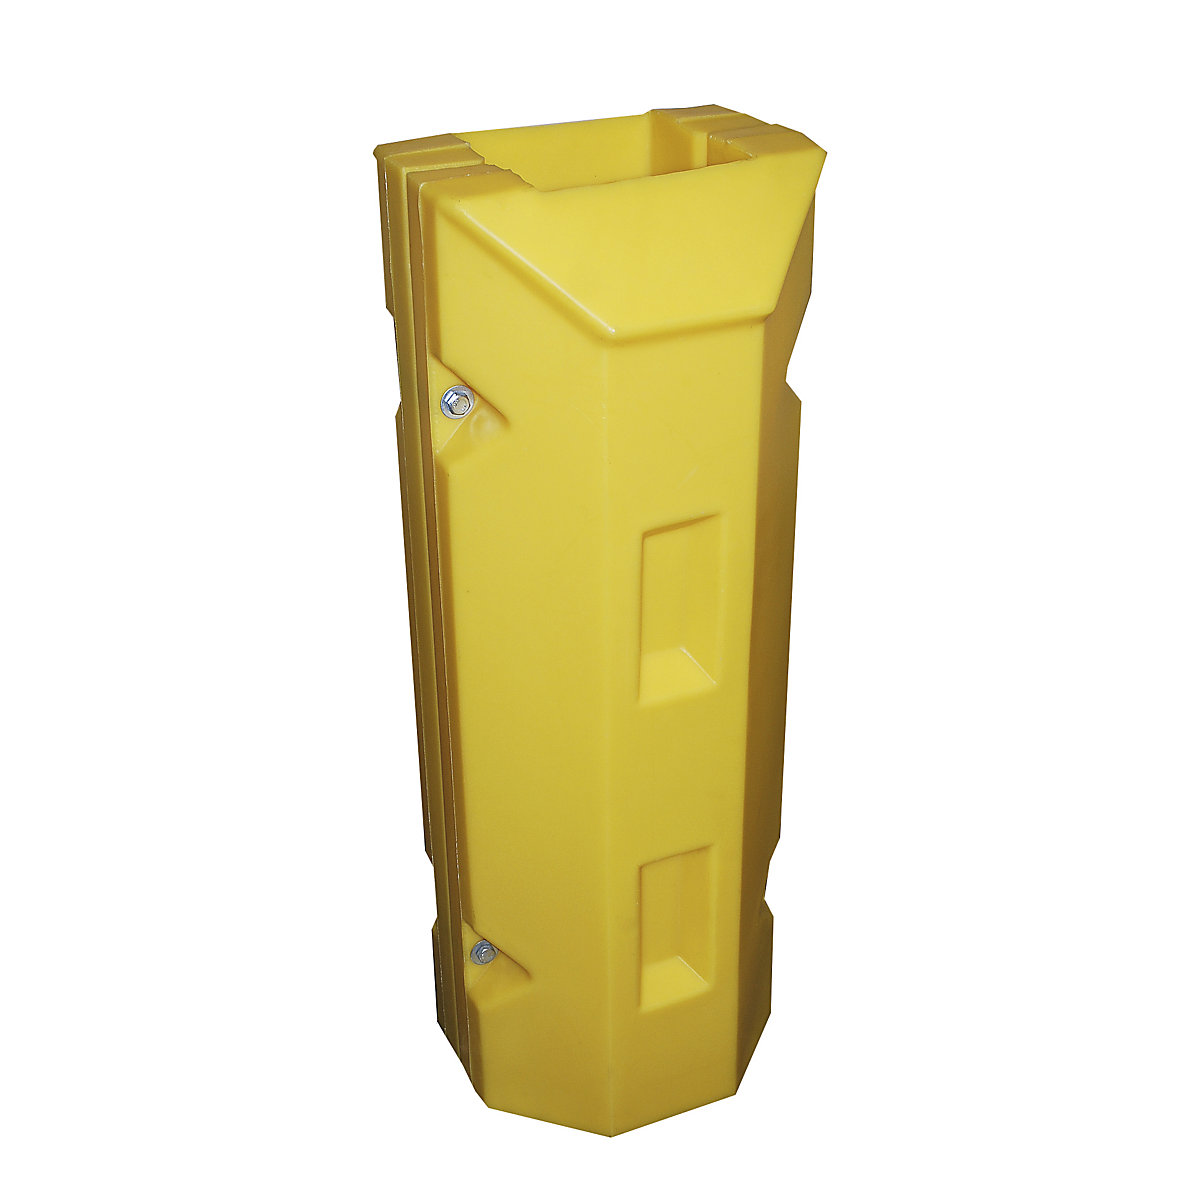 Zuil- en paalbeschermingen, van polyethyleen, geel, l x b x h = 360 x 350 x 945 mm, binnenafmetingen 185 x 180 mm-4